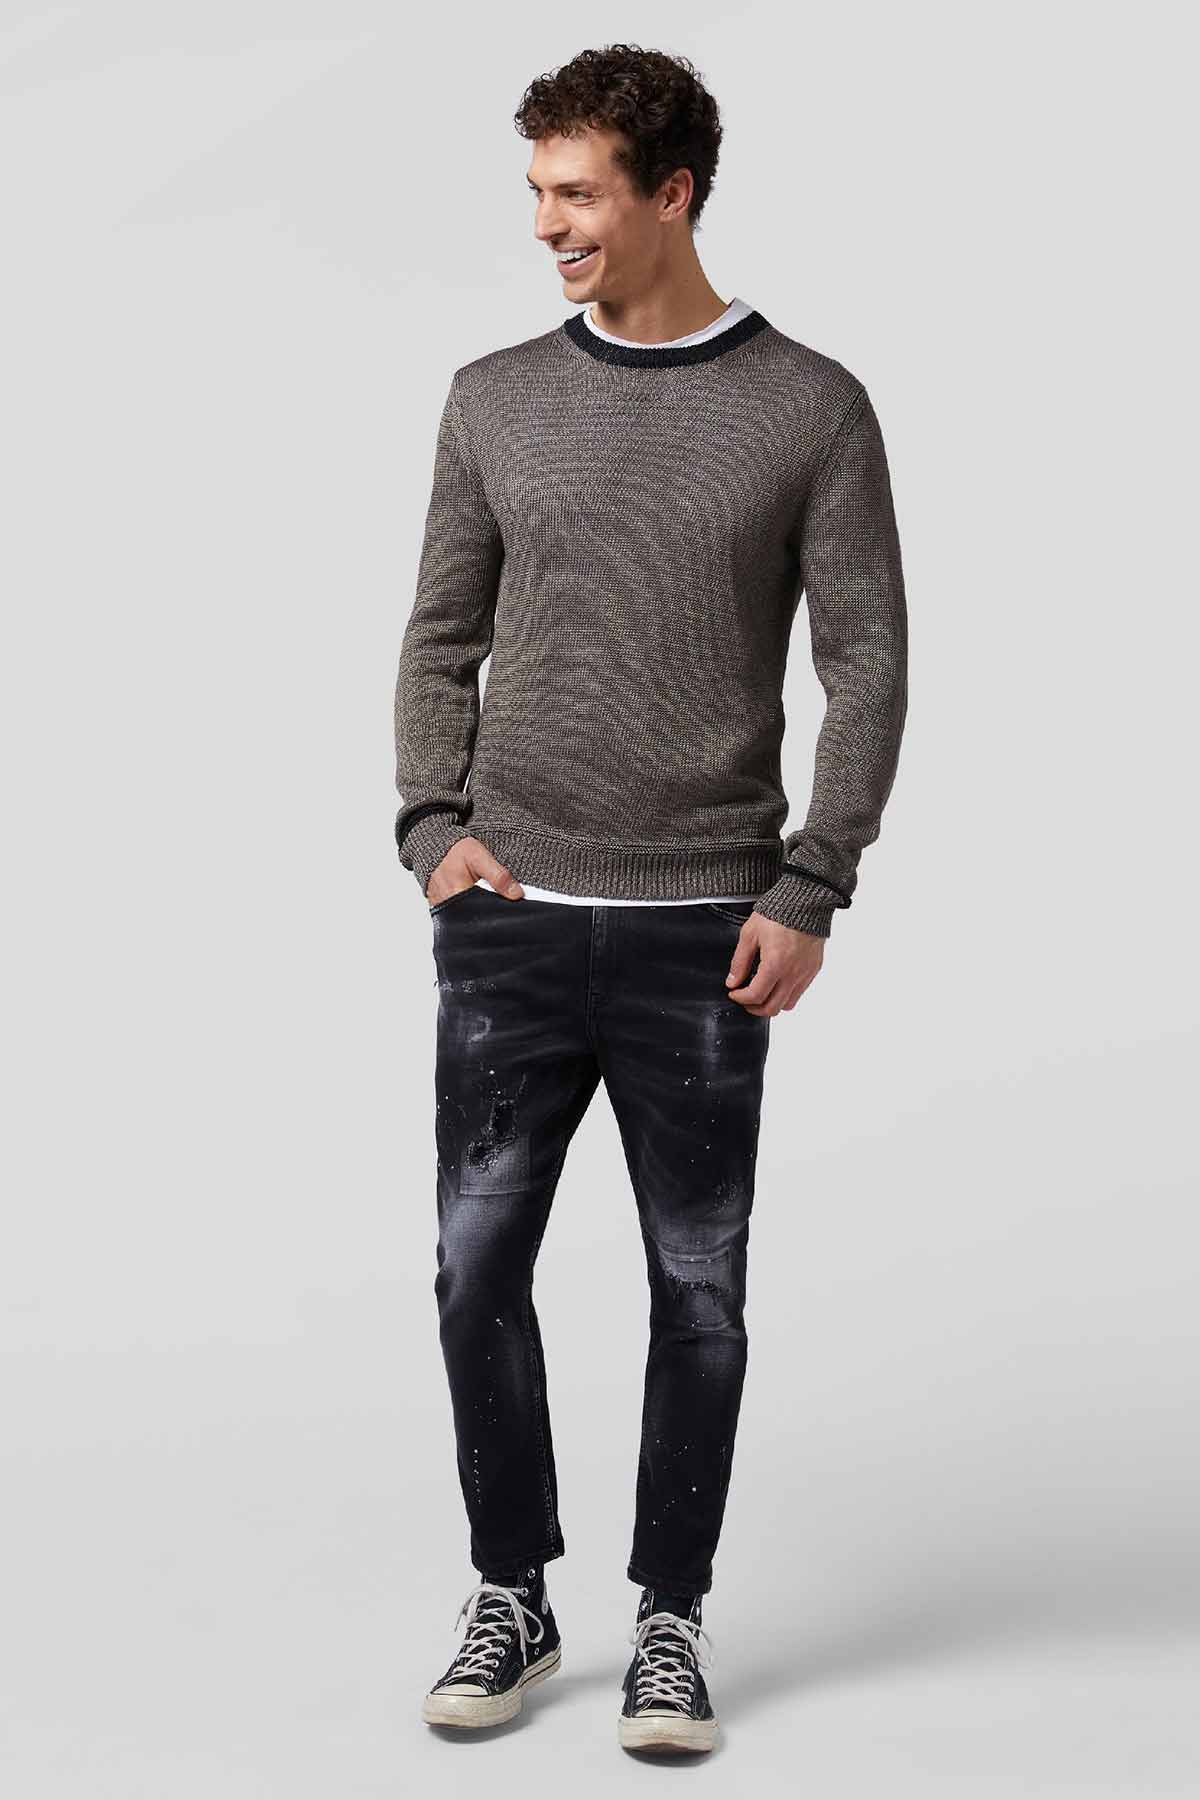 Dondup Alex Super Skinny Fit Jeans-Libas Trendy Fashion Store